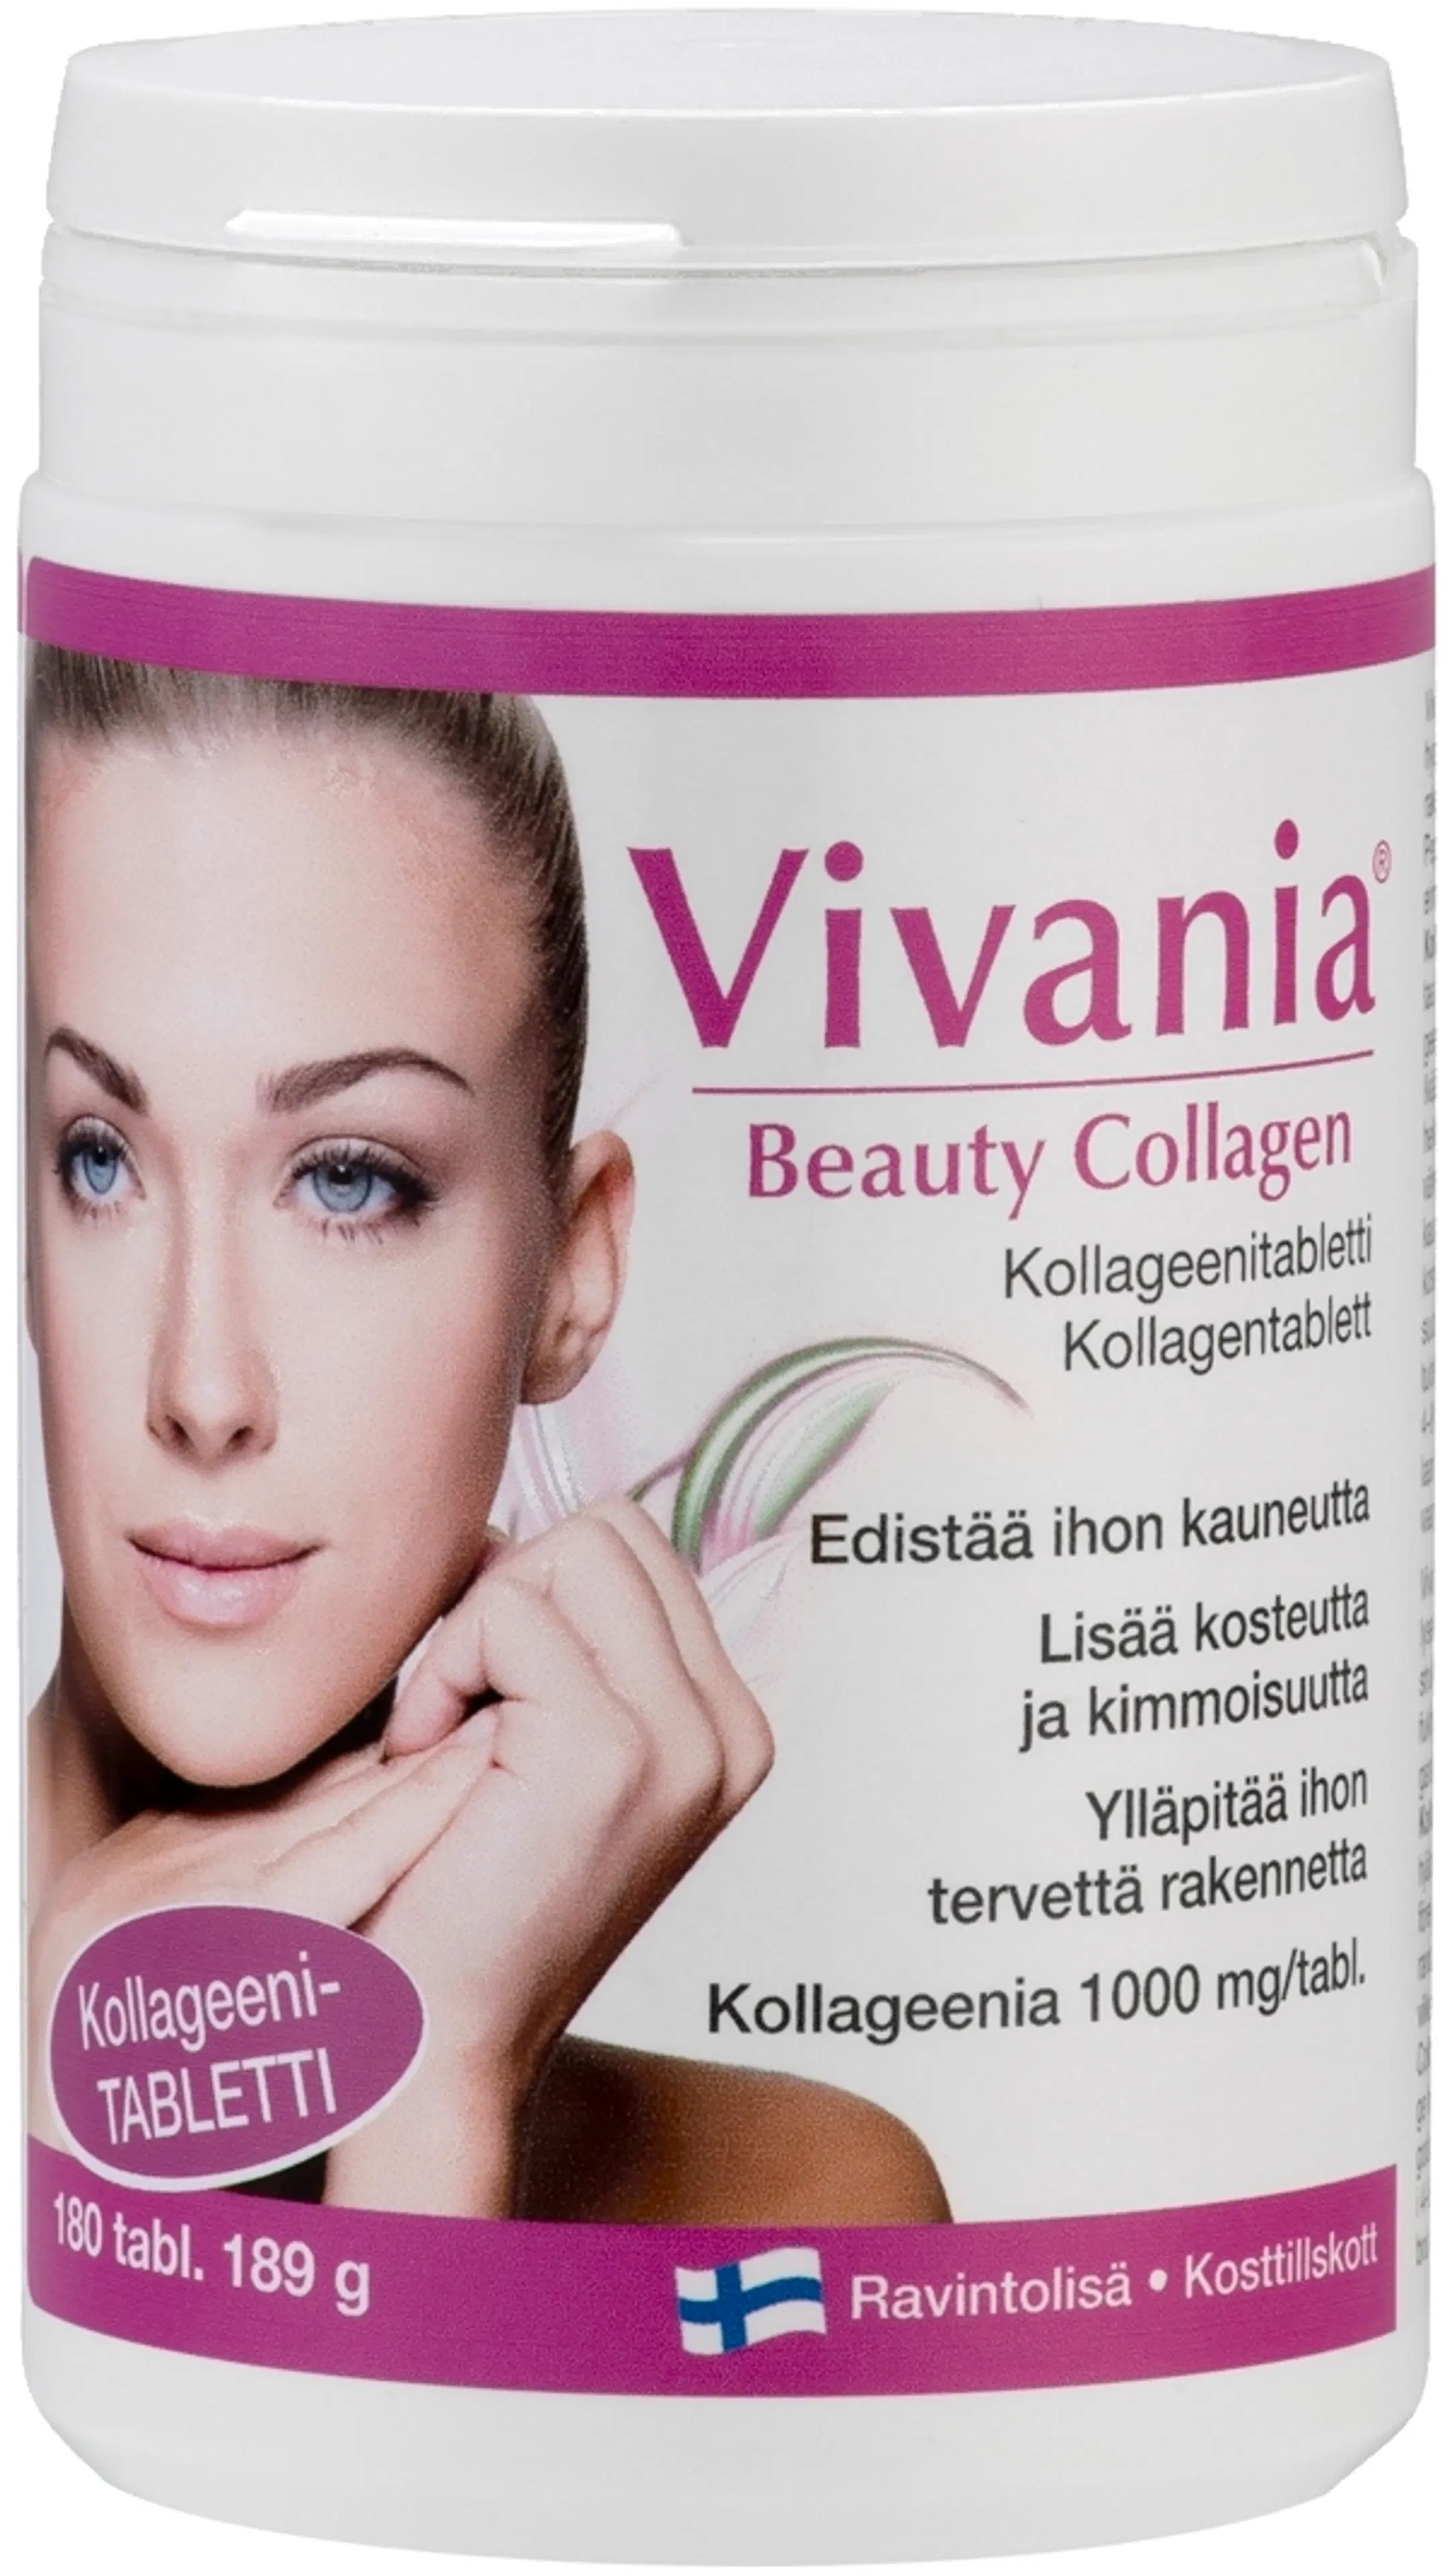 Vivania Beauty Collagen kollageenitabletti 180 tabl